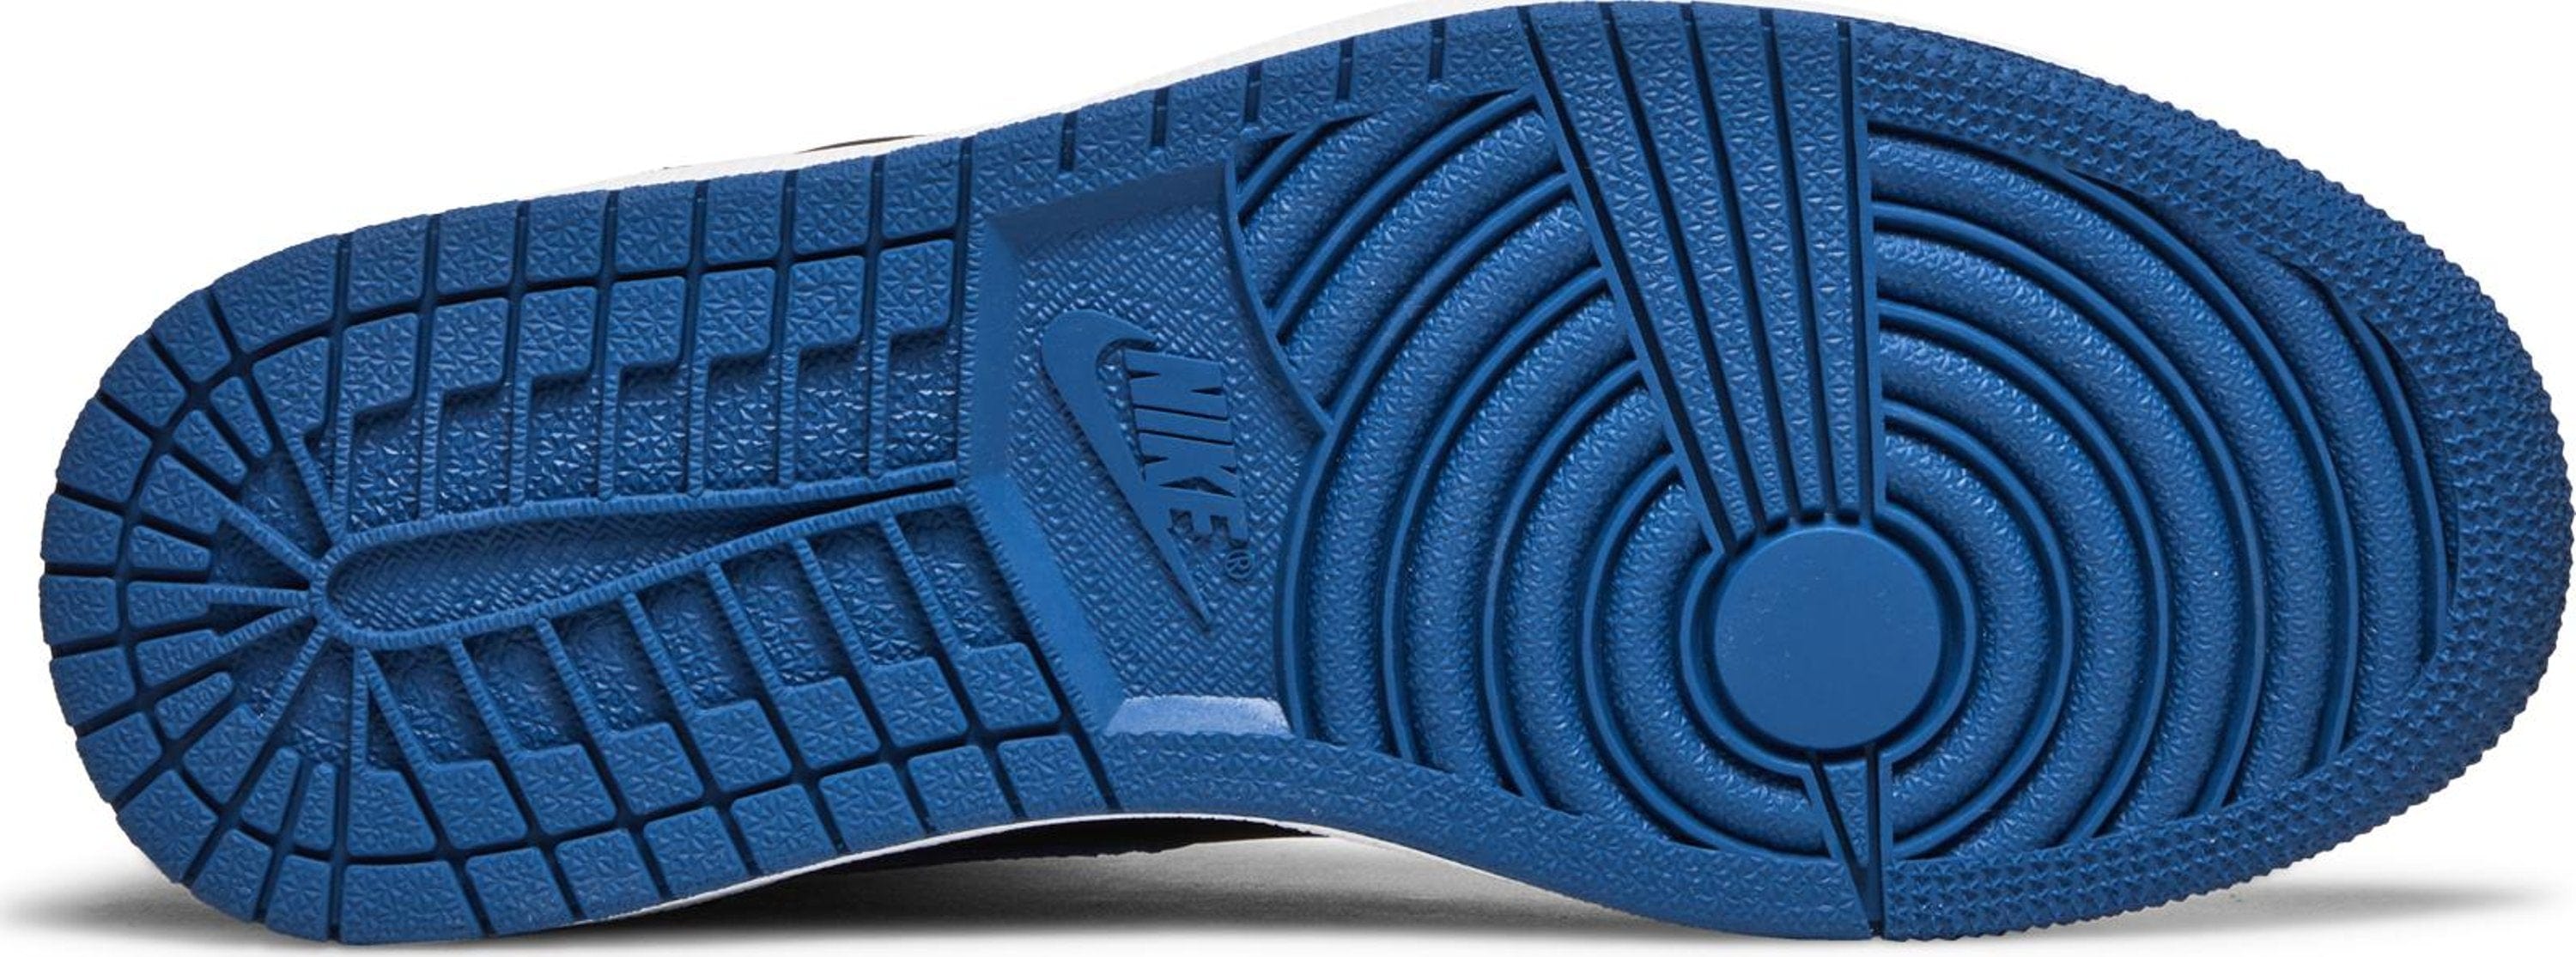 Nike Air Jordan 1 Retro High OG Dark Marina Blue Men's